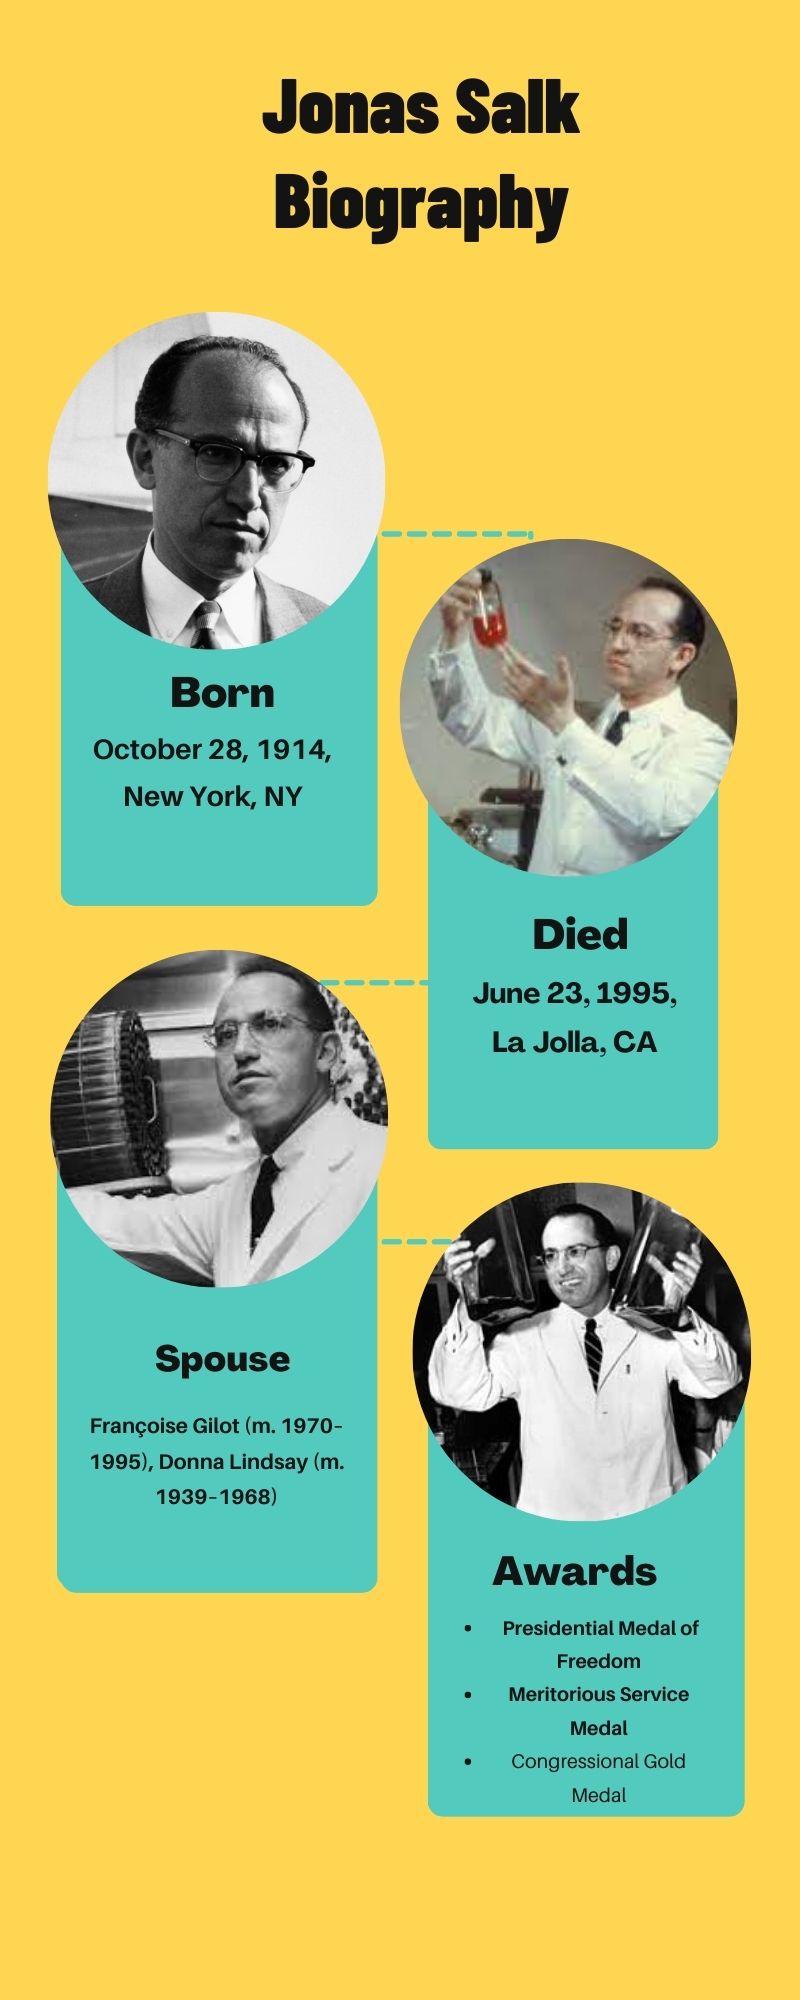 Jonas Salk Biography